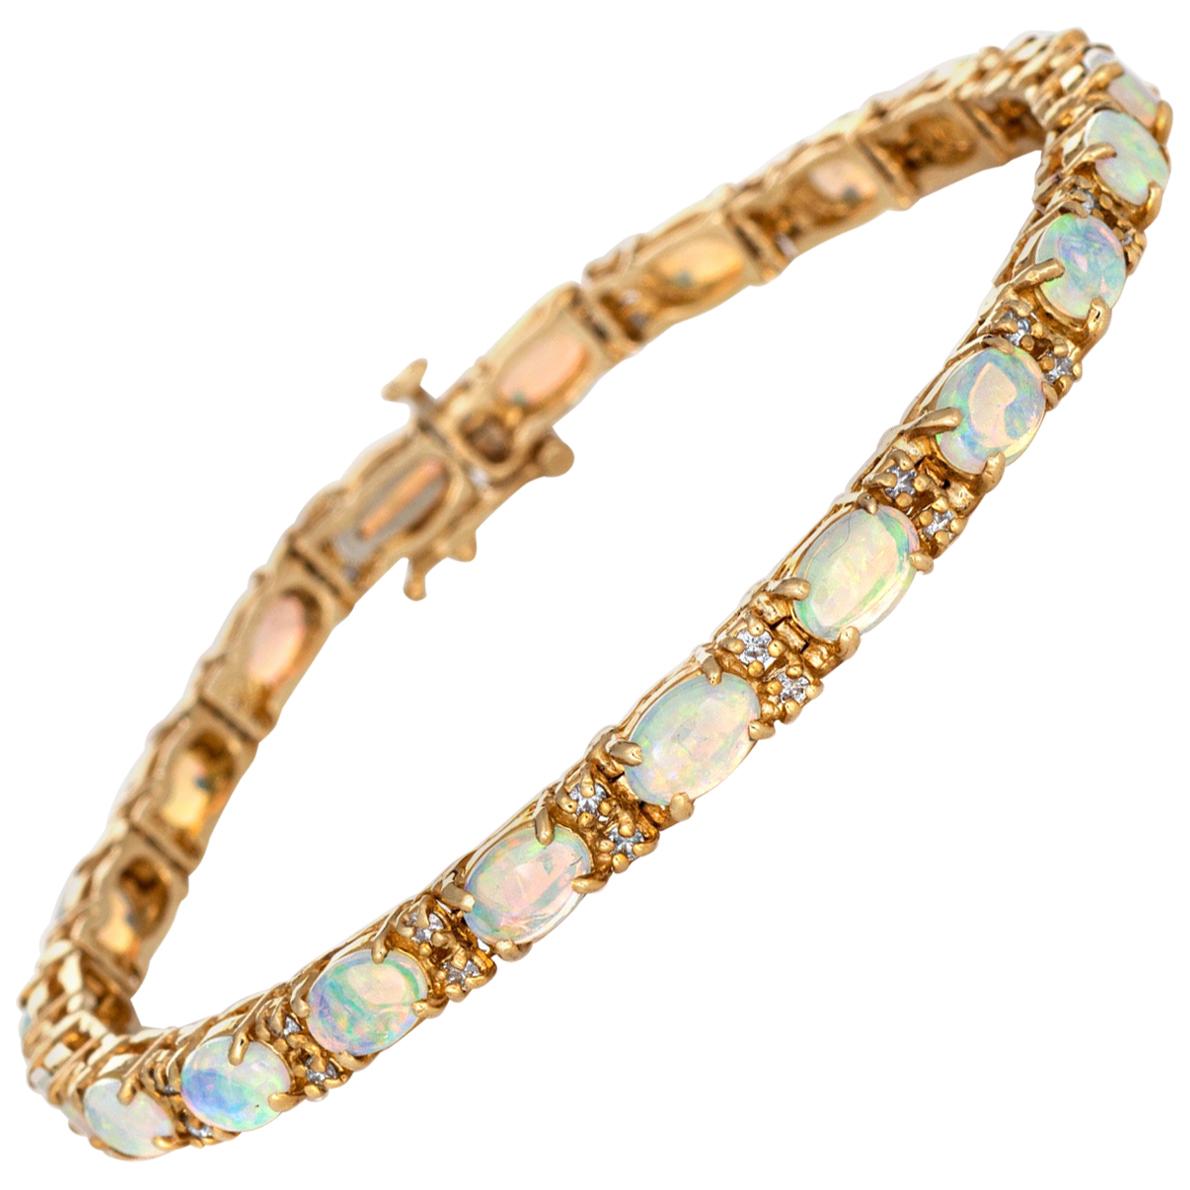 10.50 Carat Opal Diamond Bracelet Vintage 14 Karat Gold Pear Cut Fine Jewelry